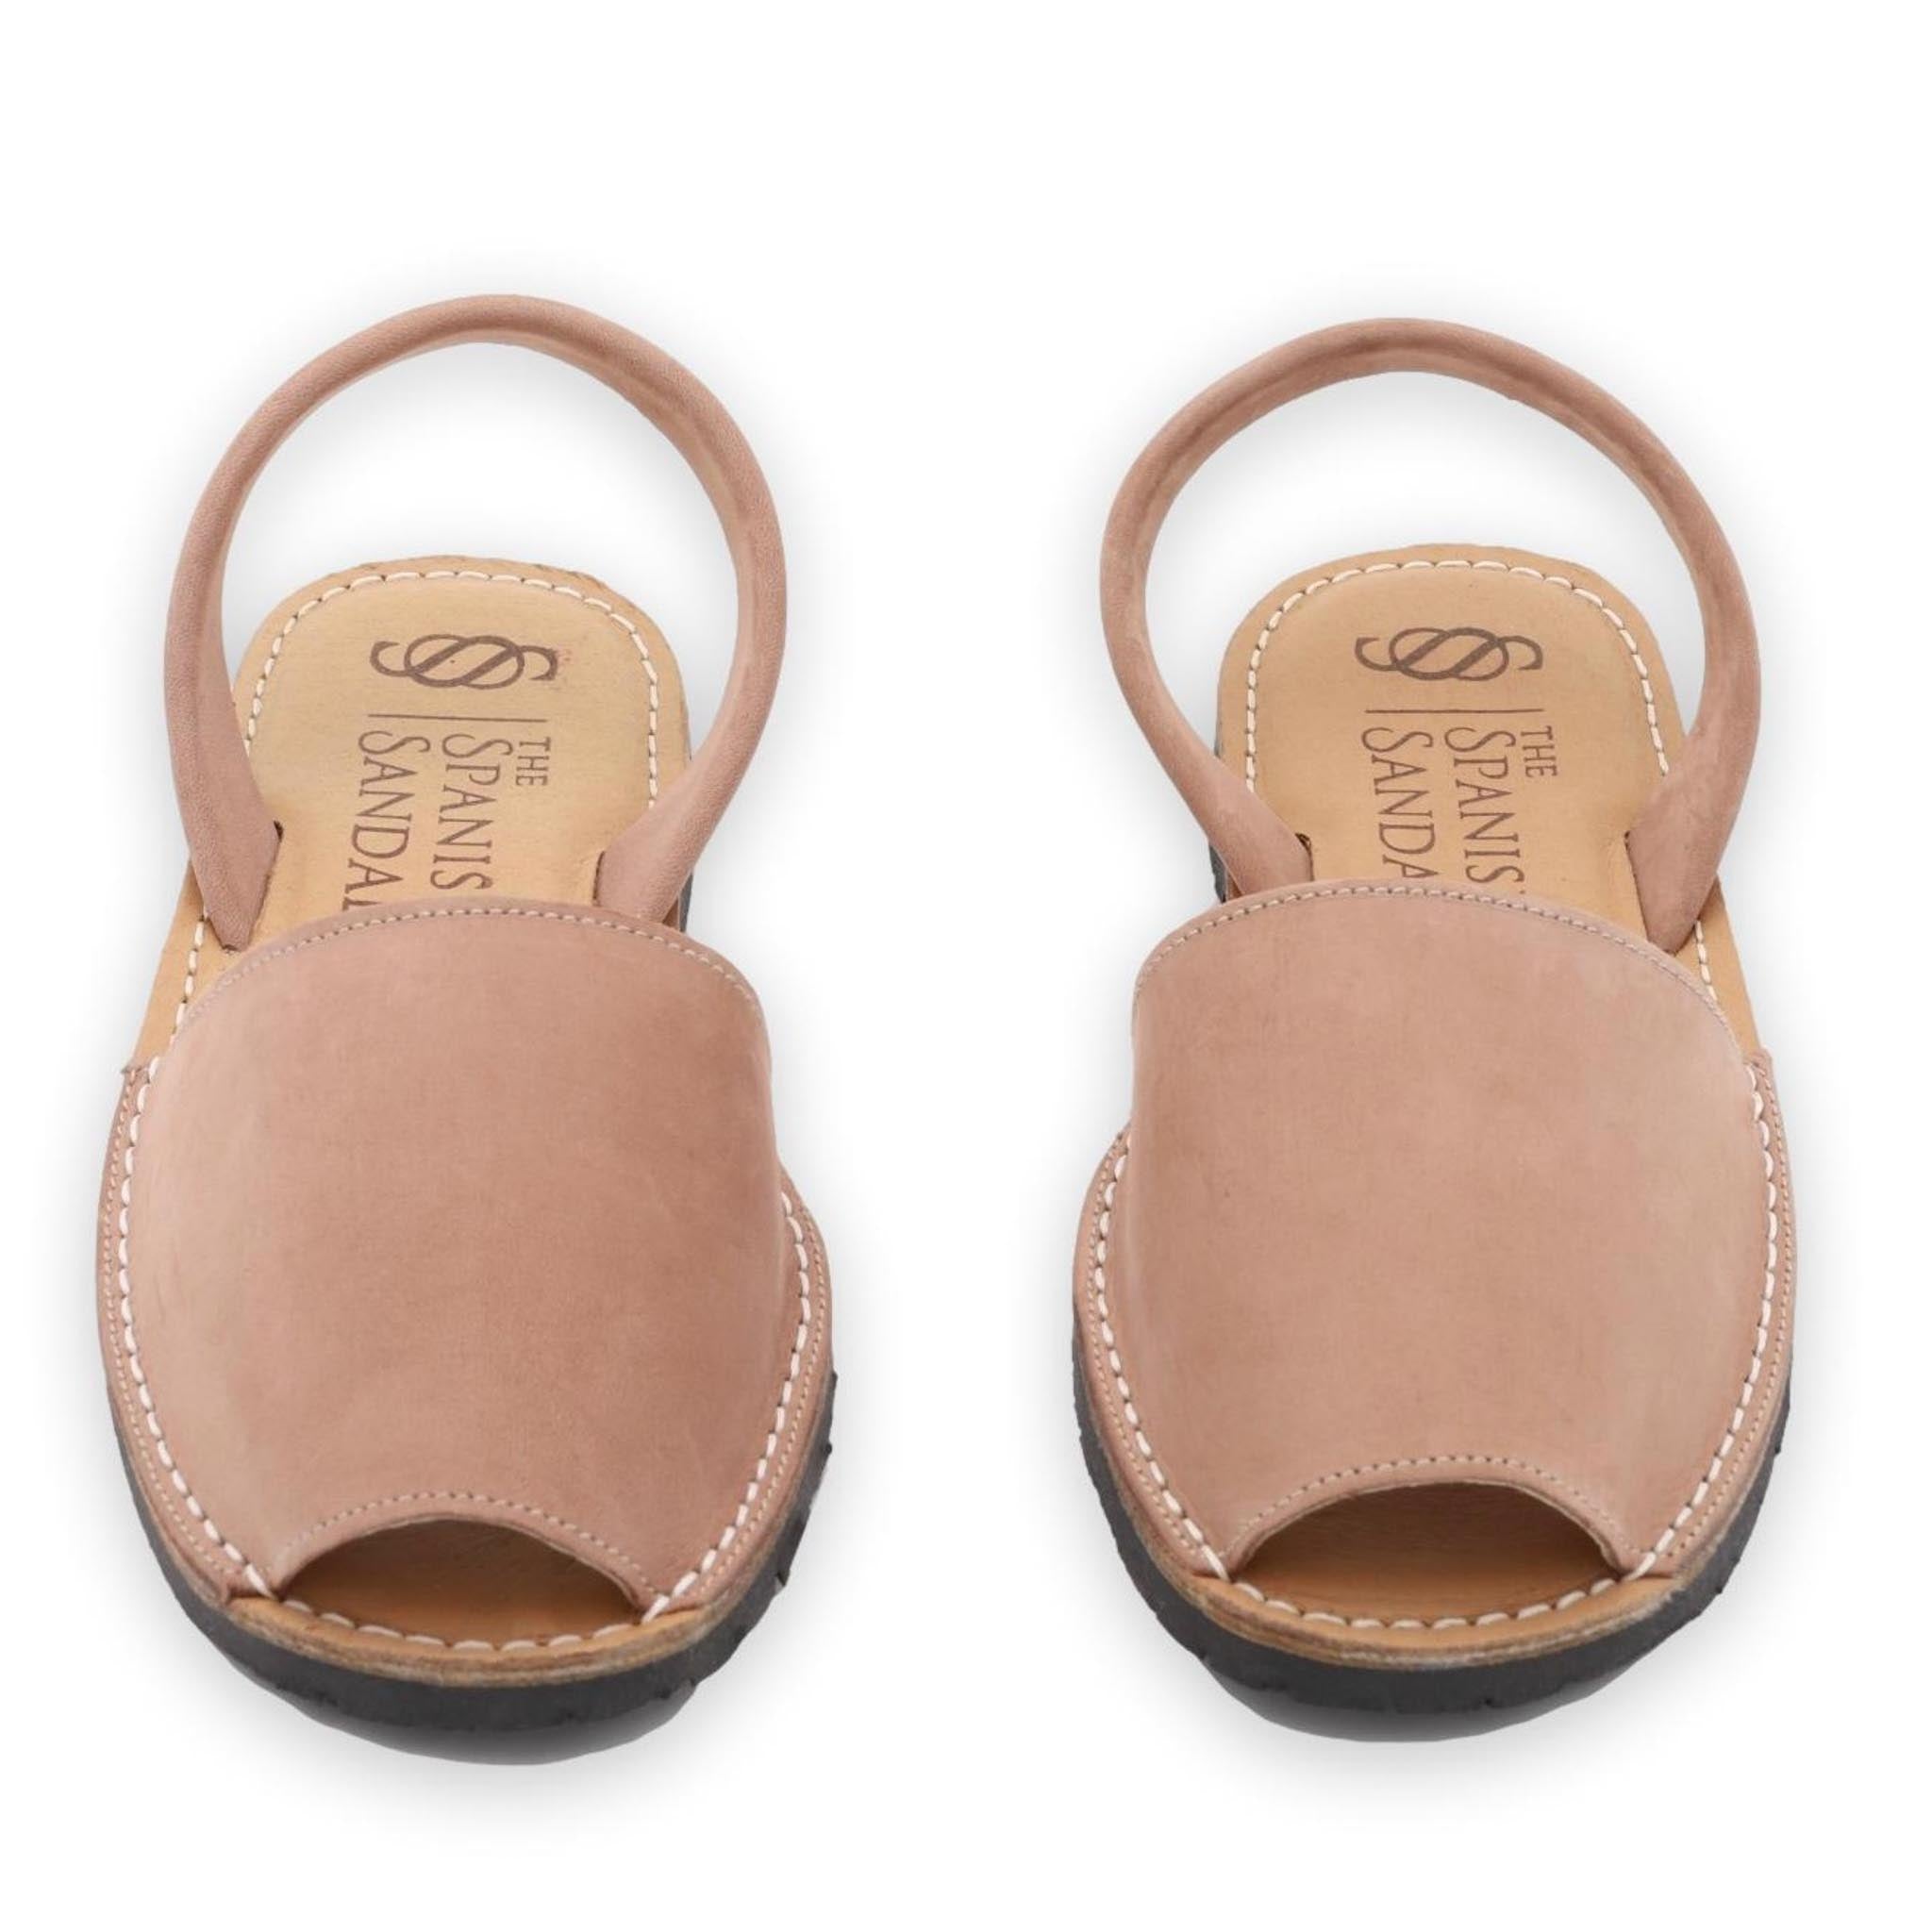 front facing classic sandals in tan. nubuck